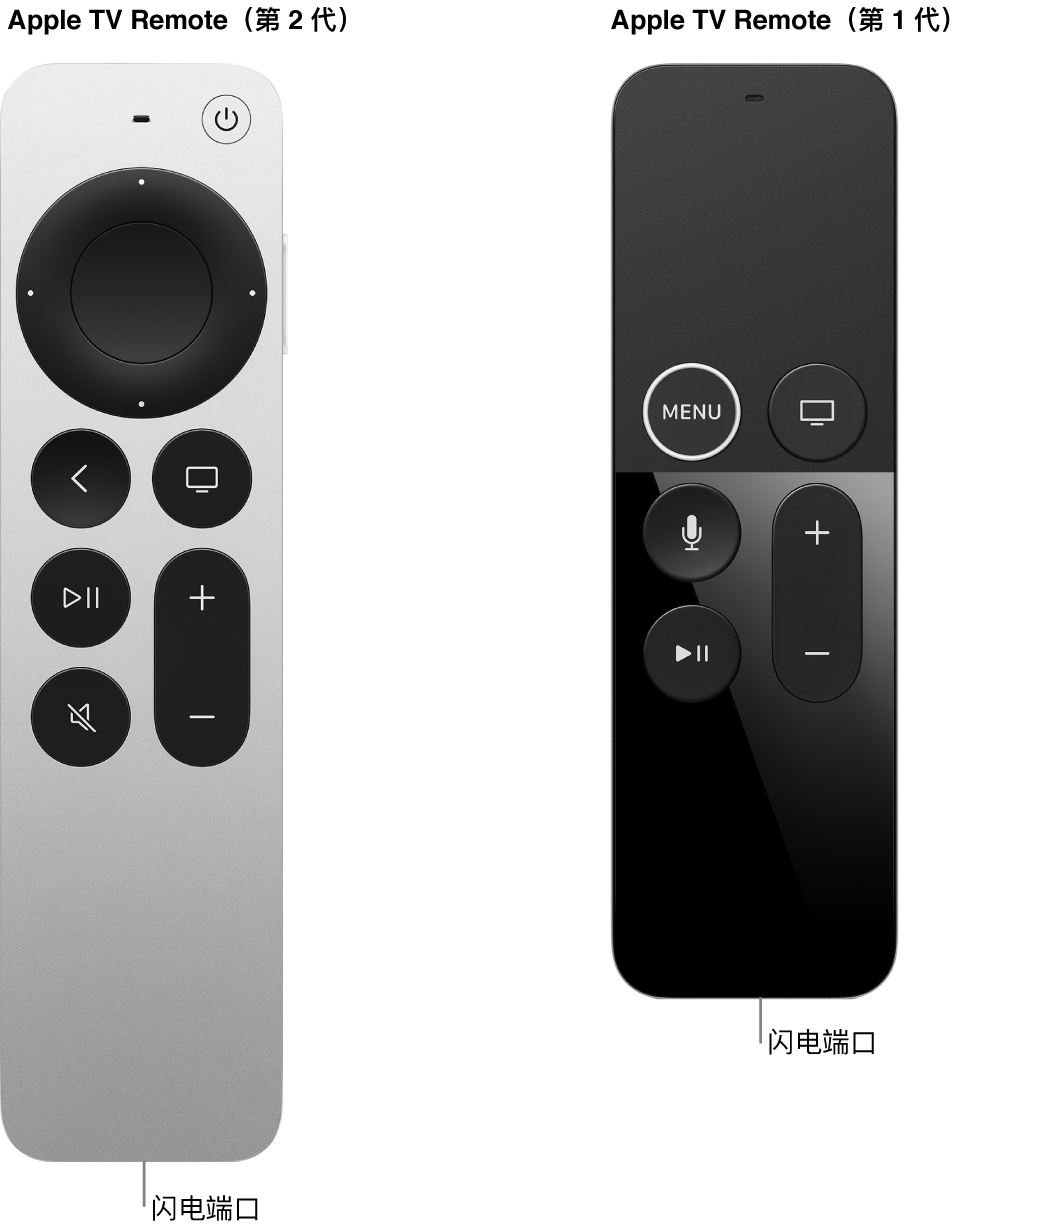 显示闪电端口的第 2 代 Apple TV Remote 和第 1 代 Apple TV Remote 图像